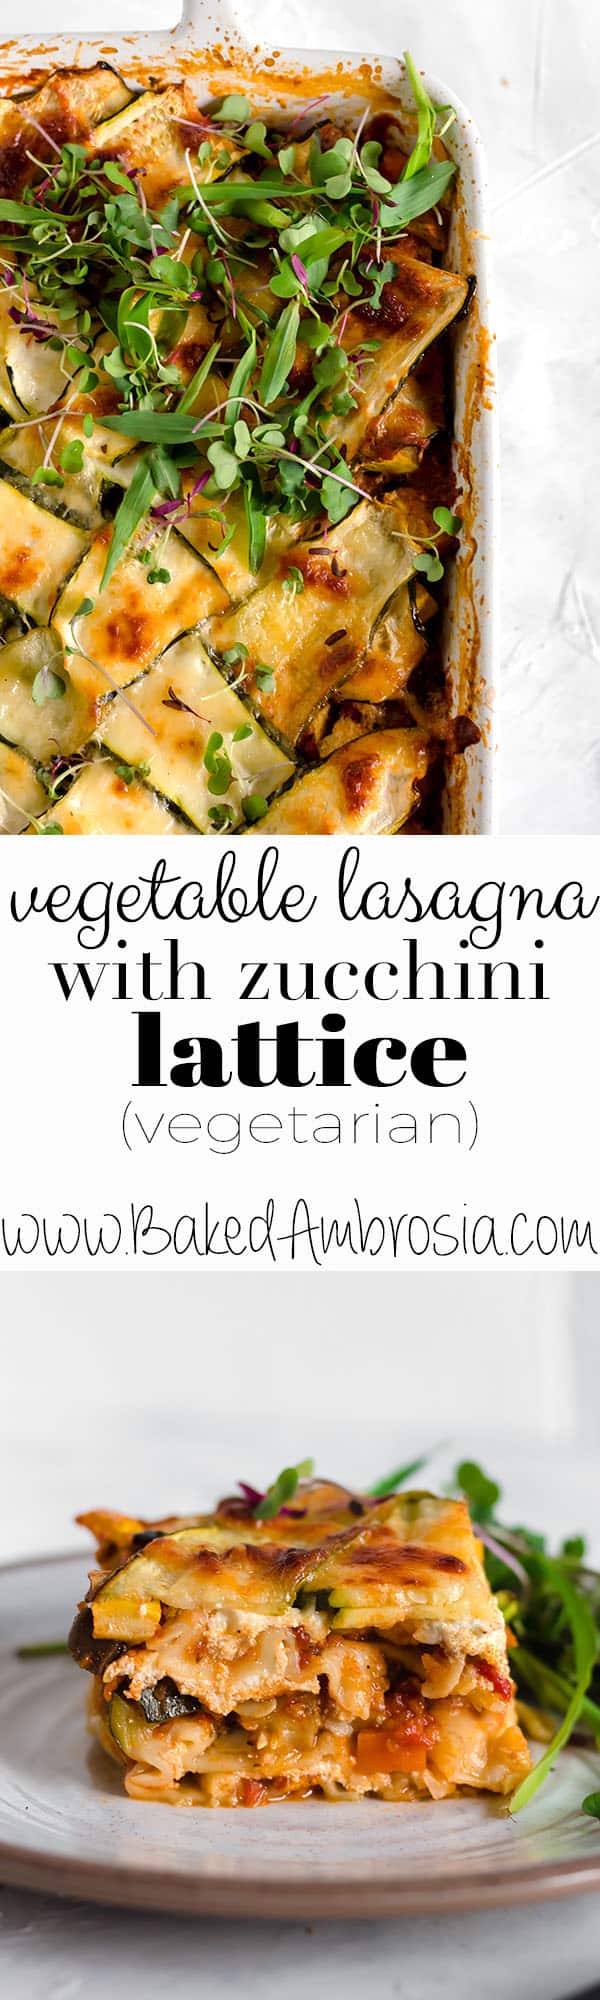 Vegetable Lasagna with Zucchini Lattice (vegetarian)